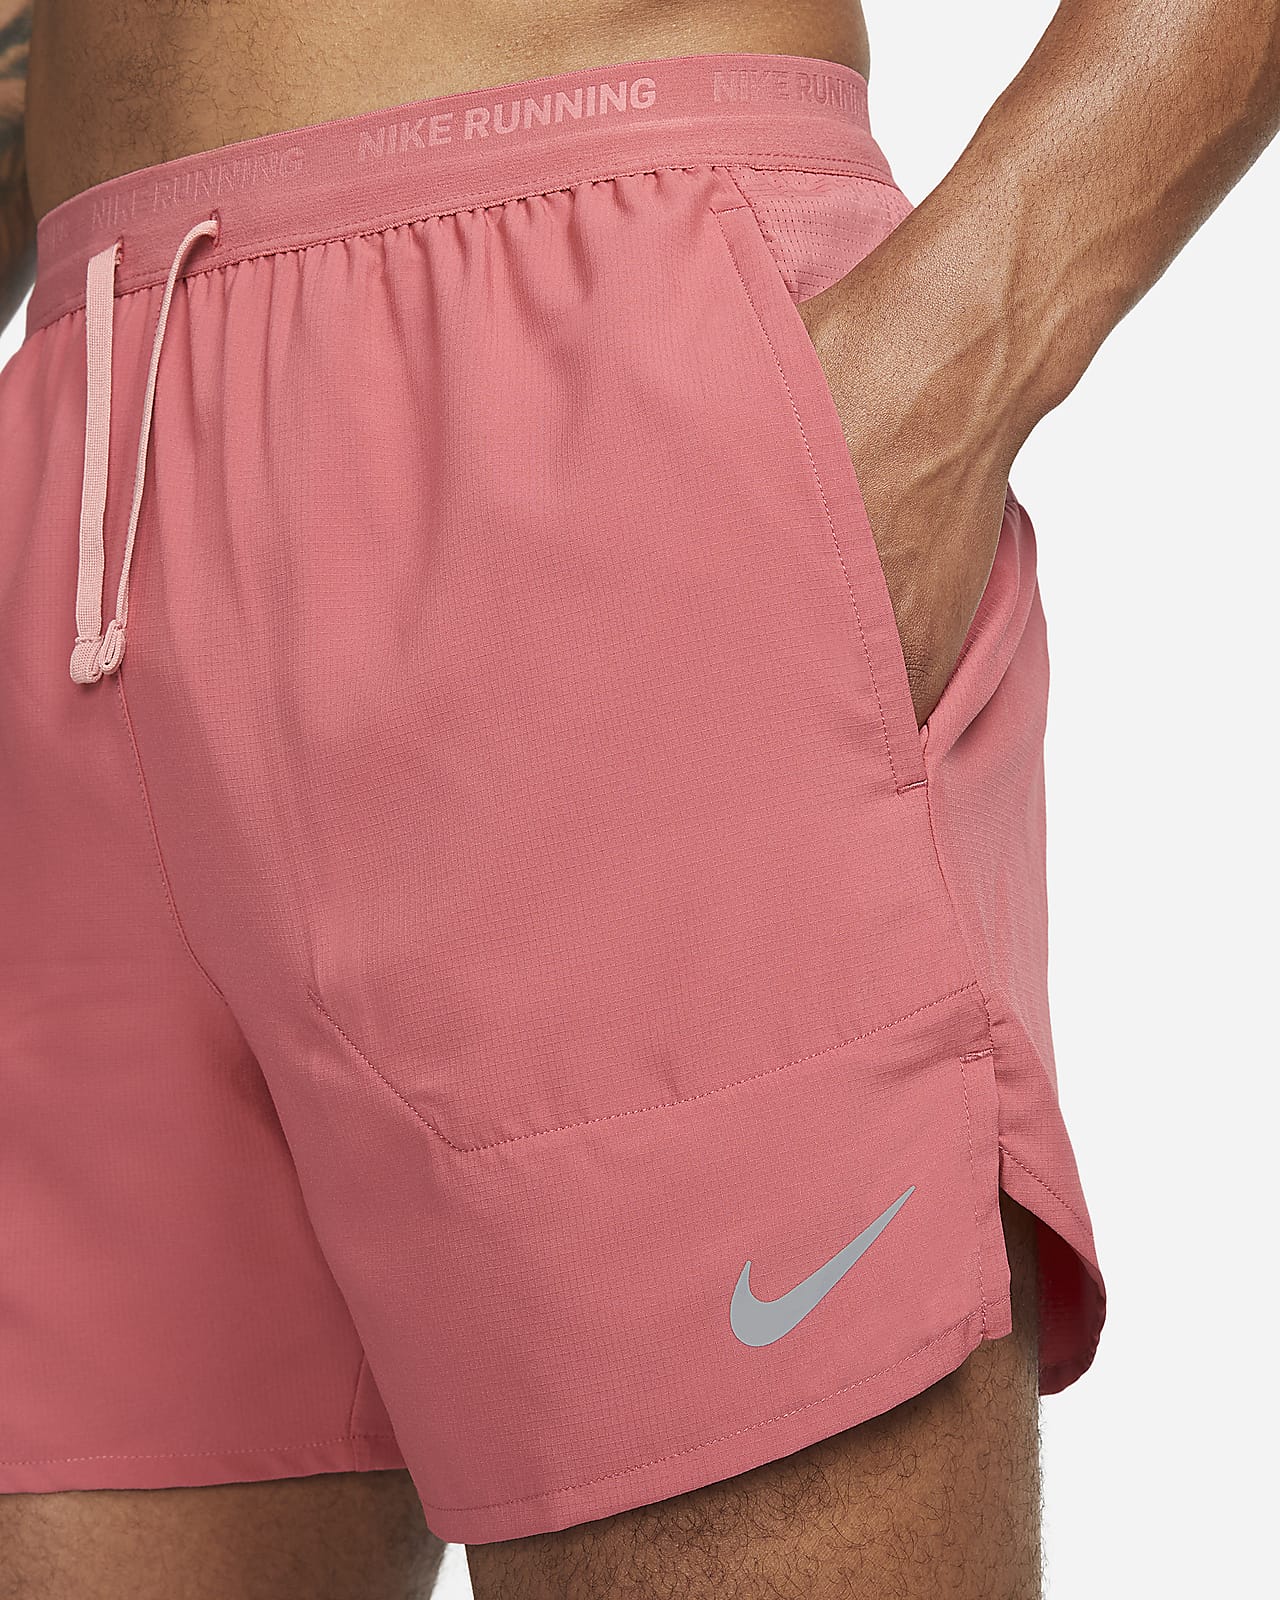 Nike Men's Shorts - Purple - XL